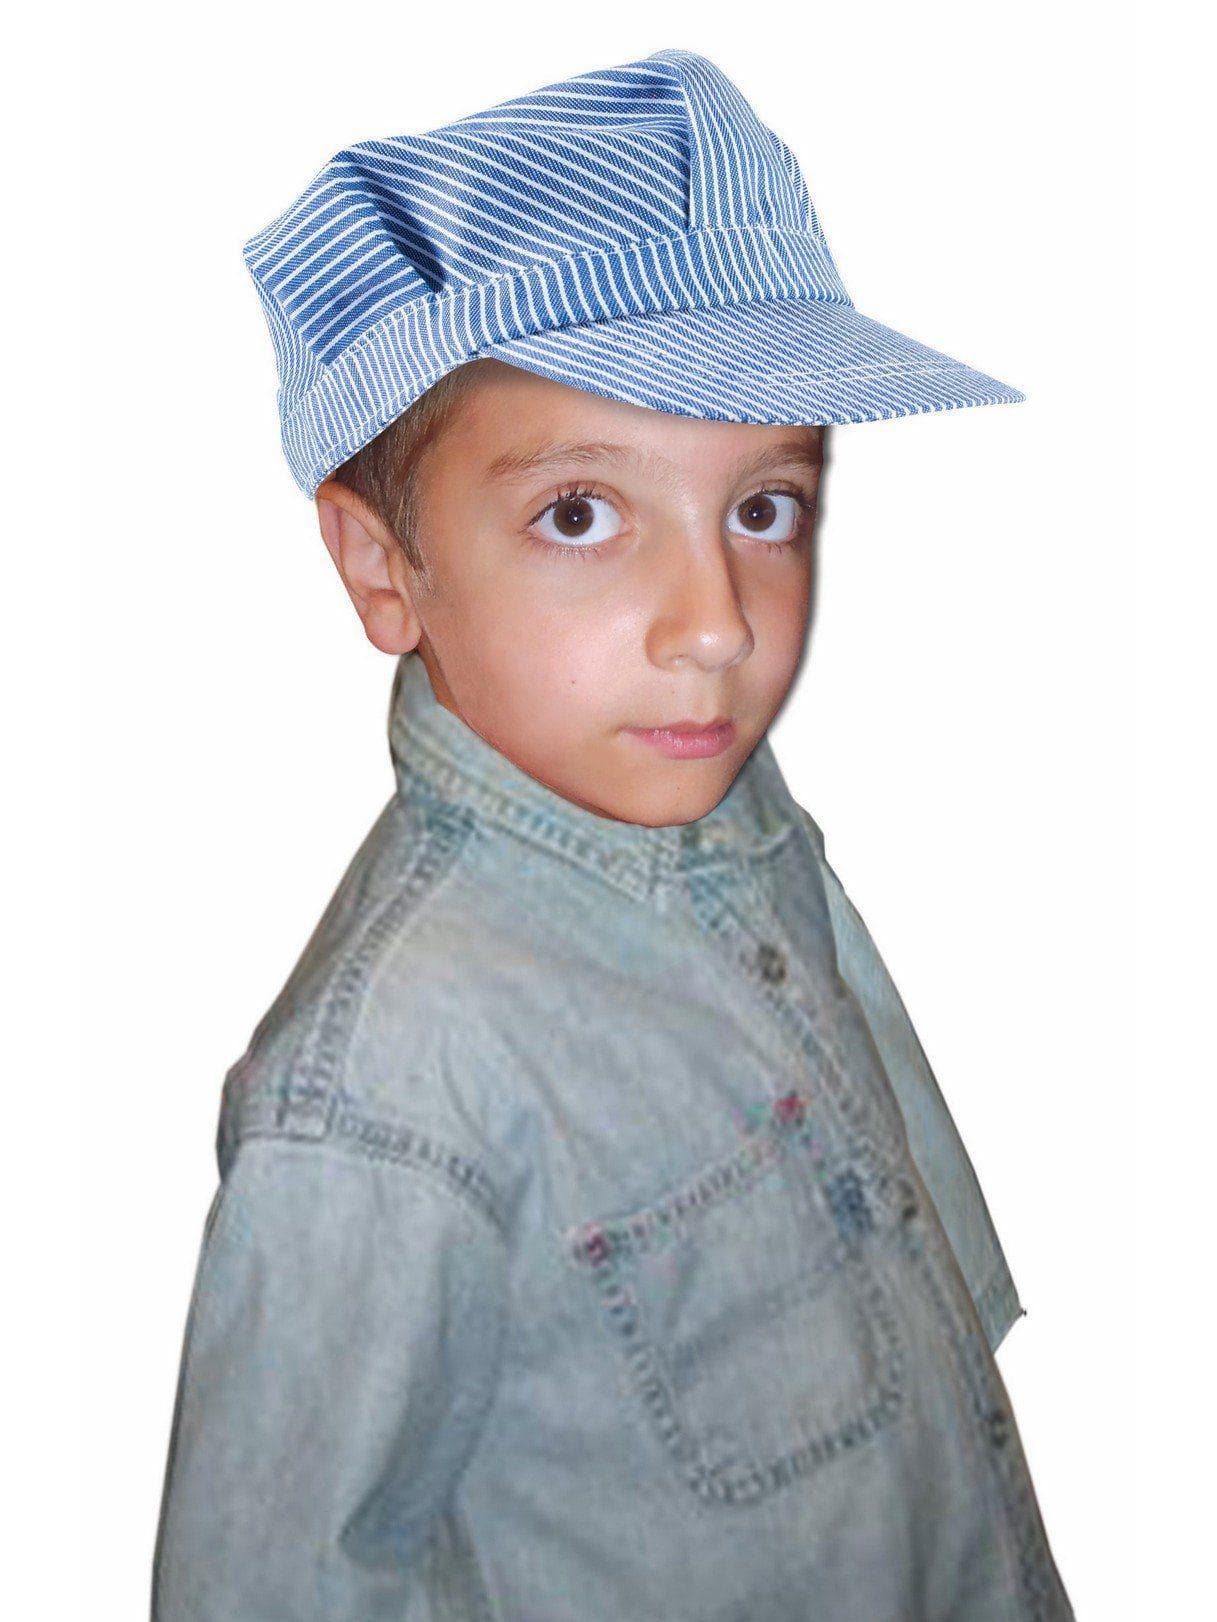 Engineer Child Deluxe Hat - costumes.com